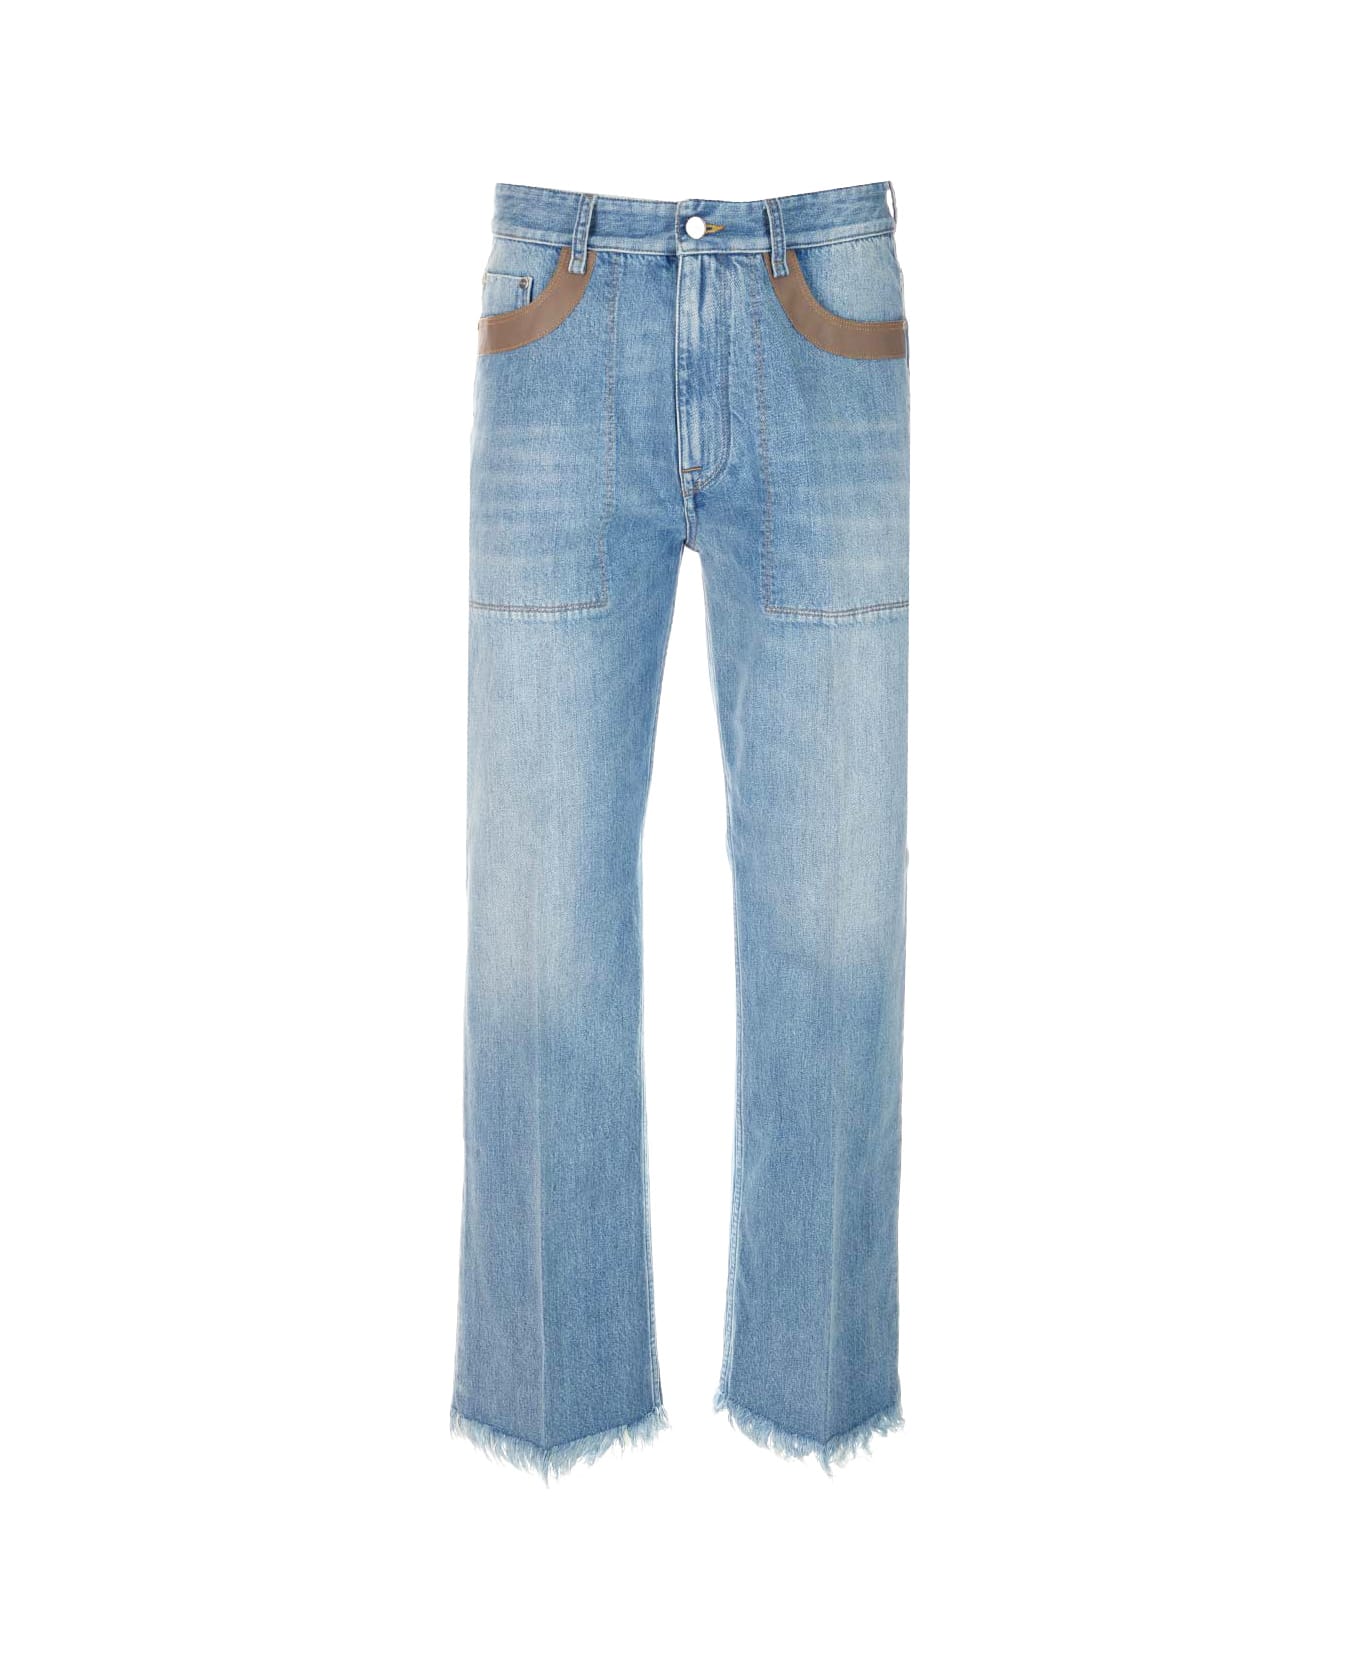 Fendi Light Blue Jeans With Fringes - Blue デニム